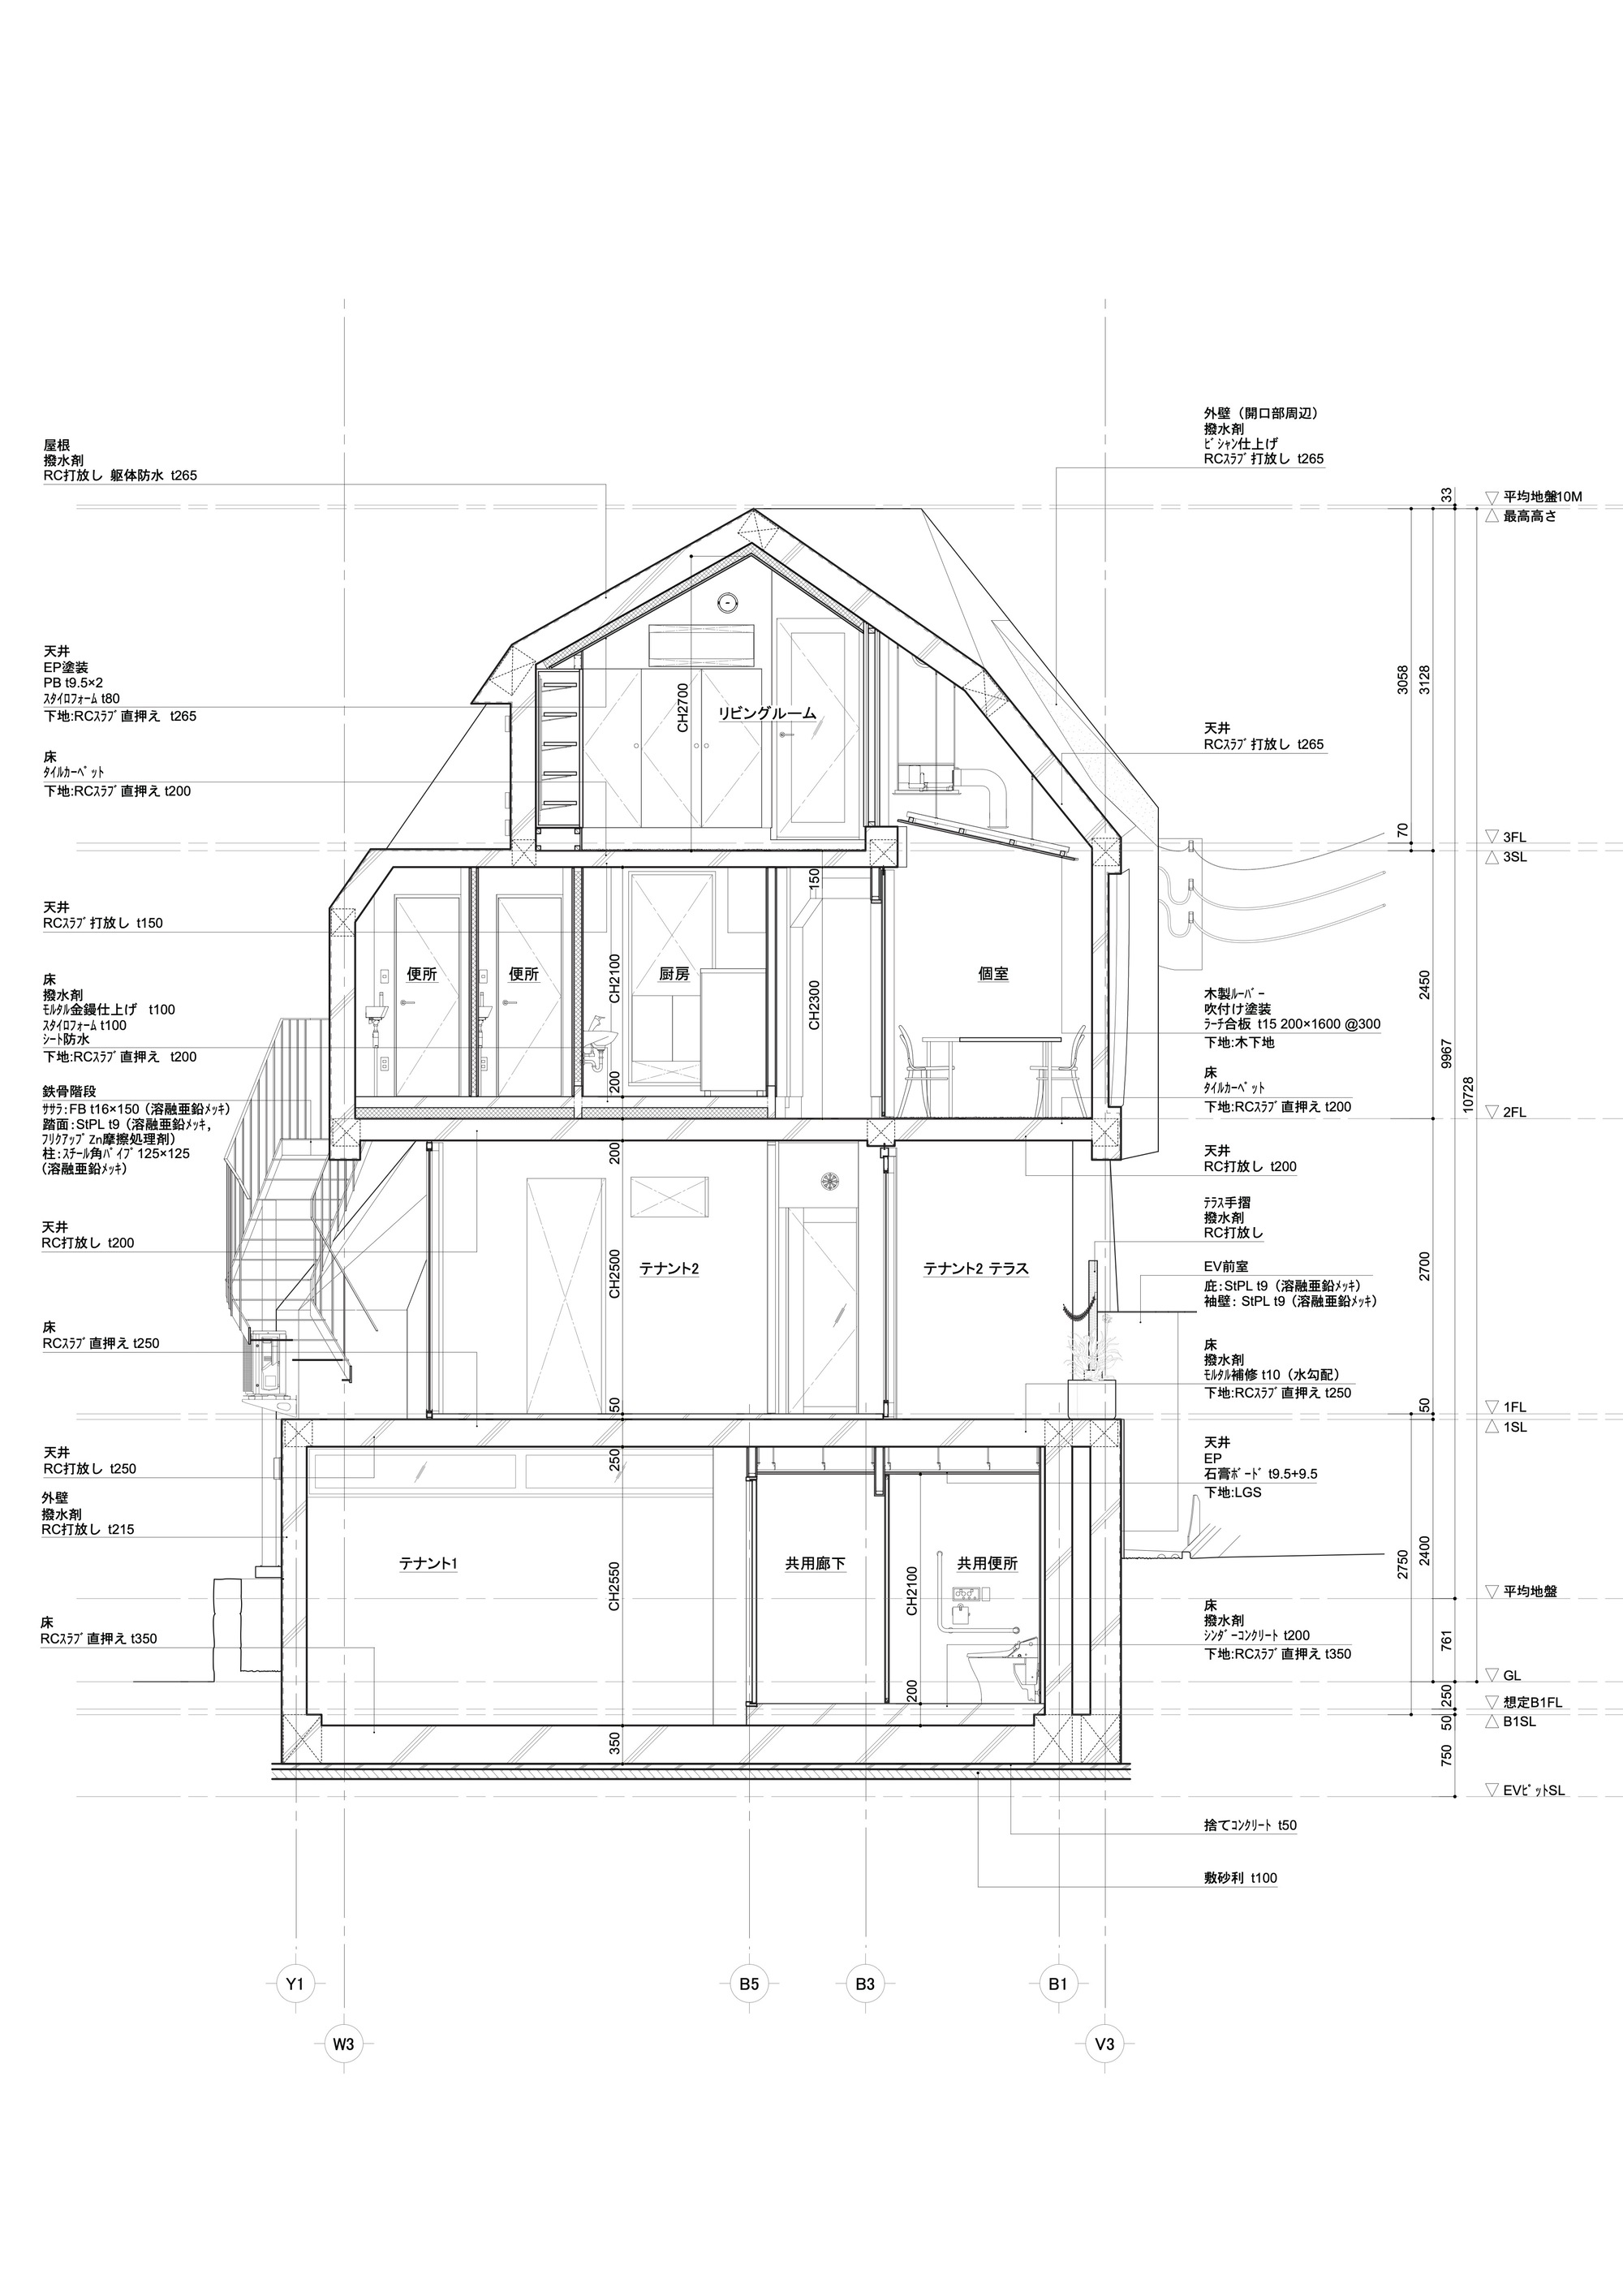 Plan of the restaurant building